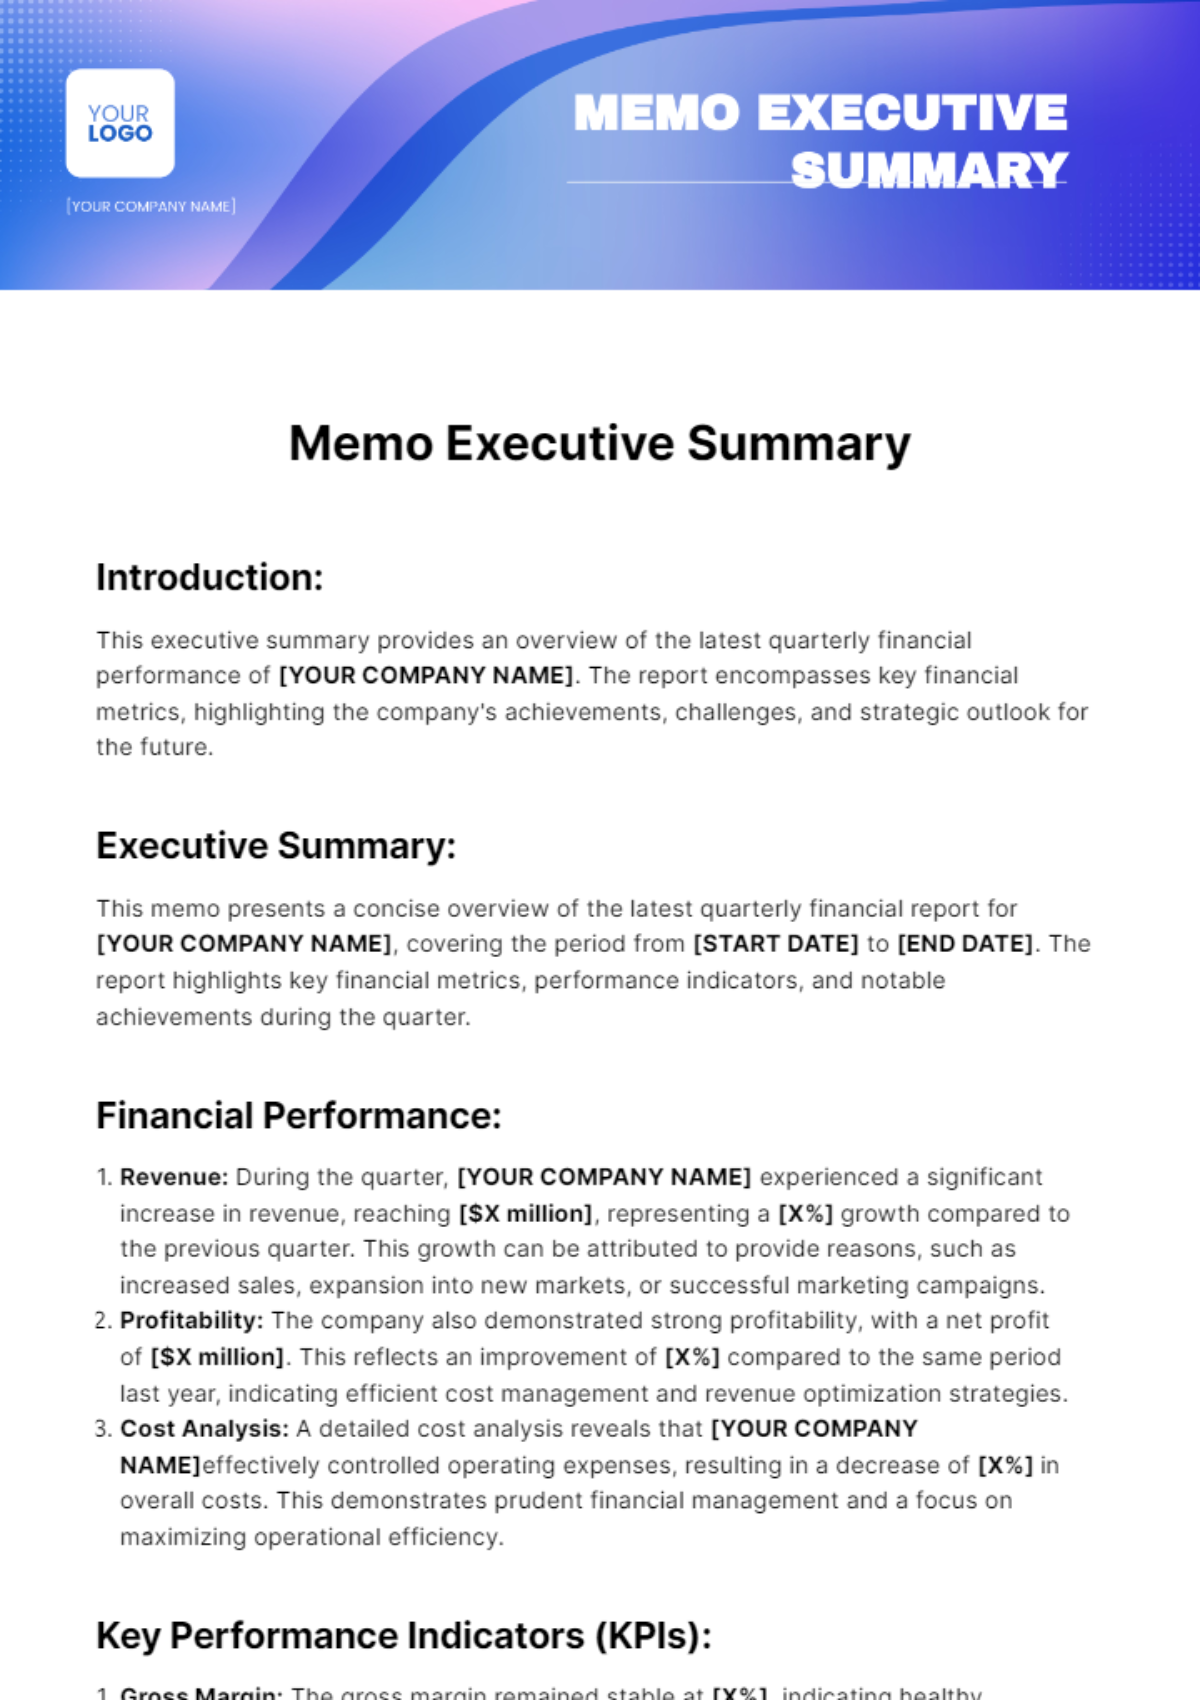 Memo Executive Summary Template